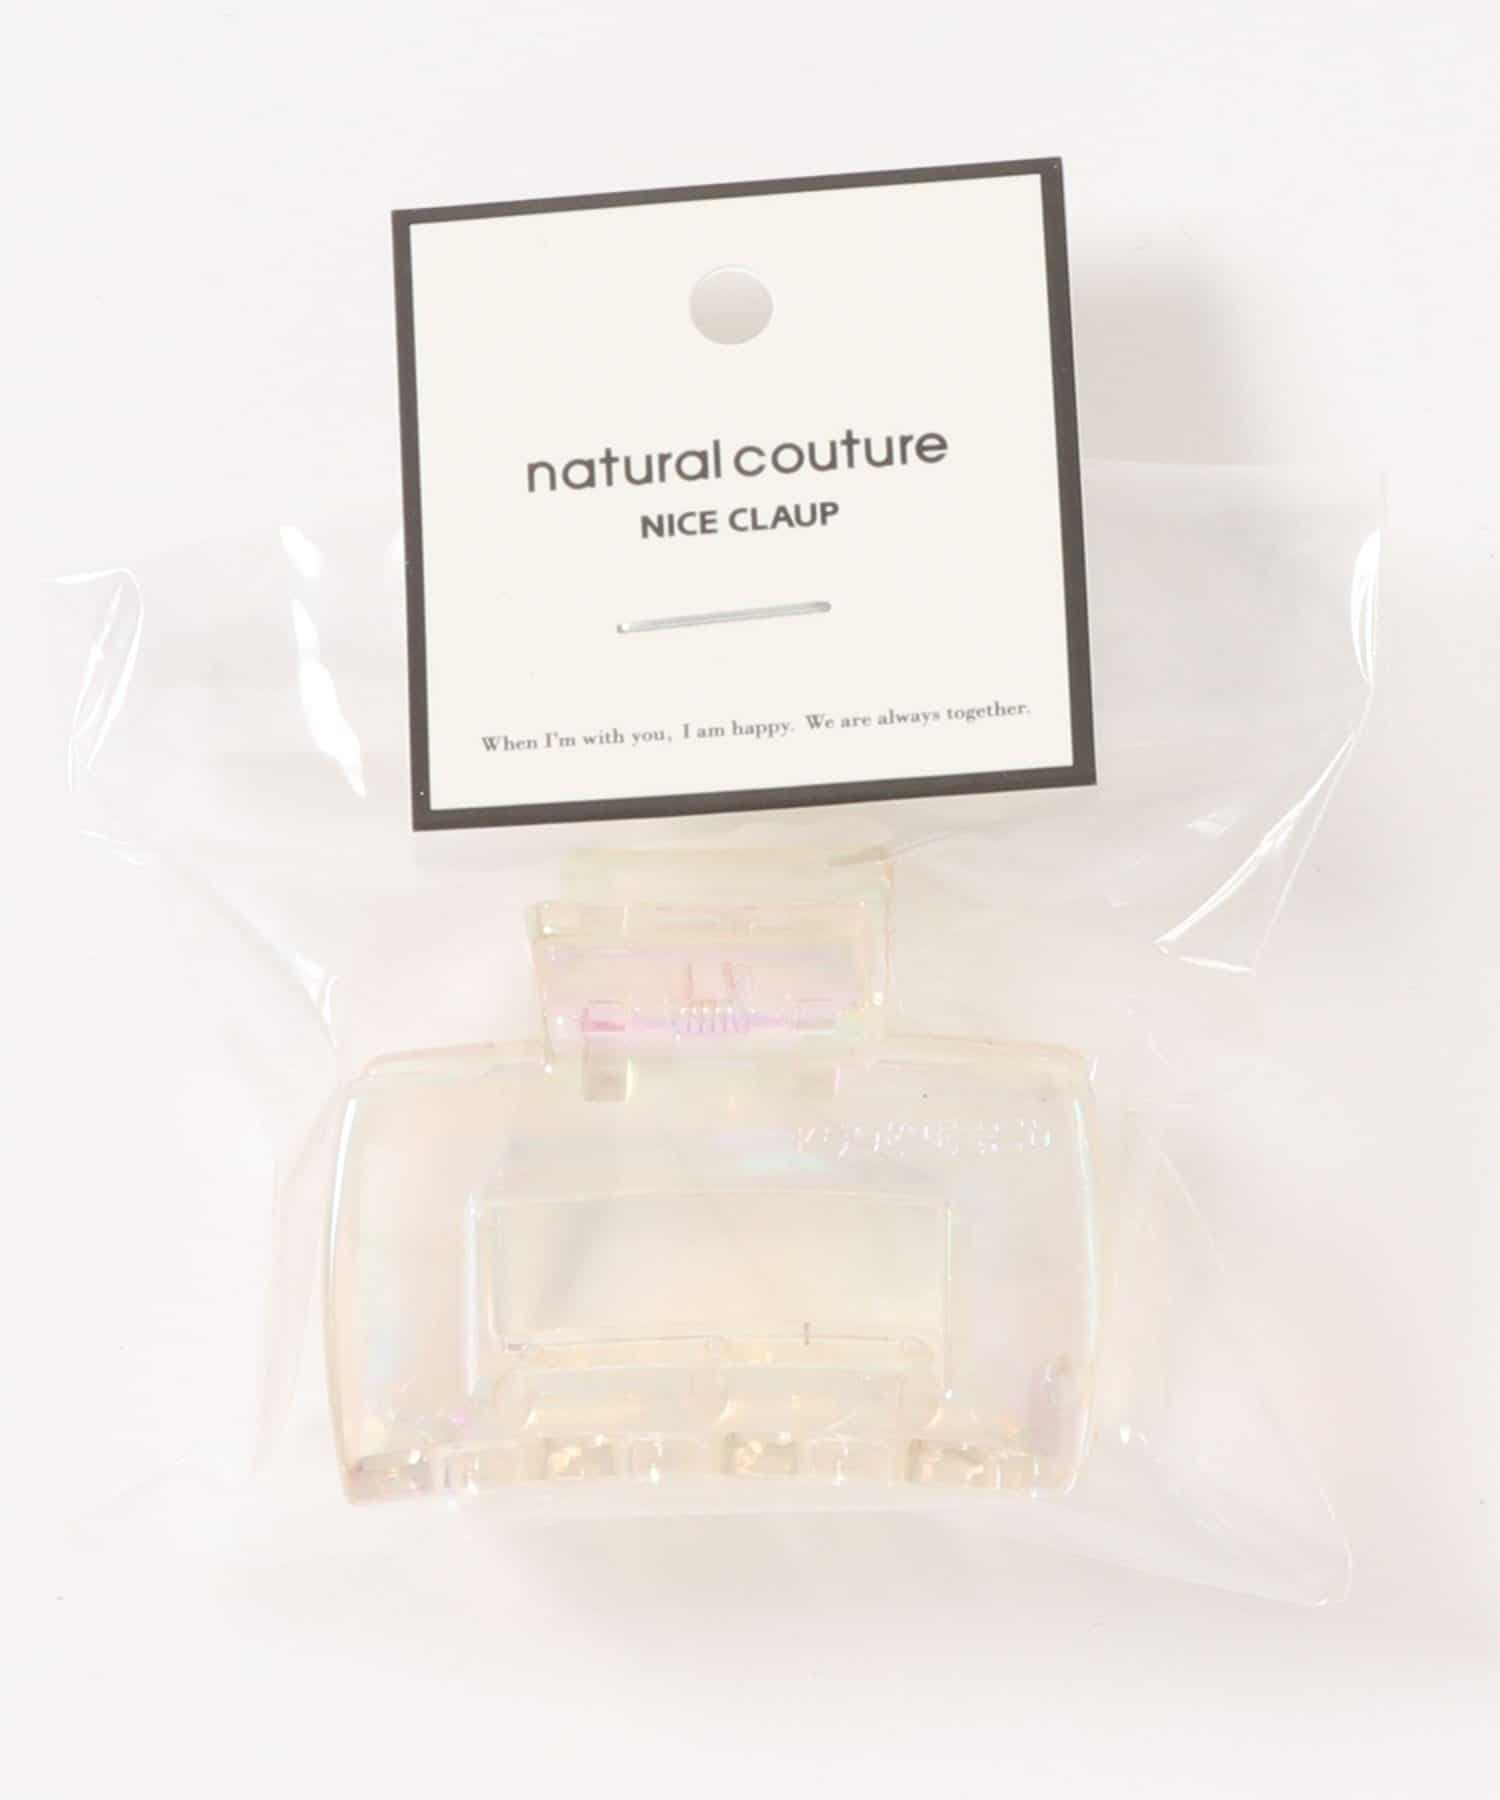 natural couture(ナチュラルクチュール) オーロラヘアピン